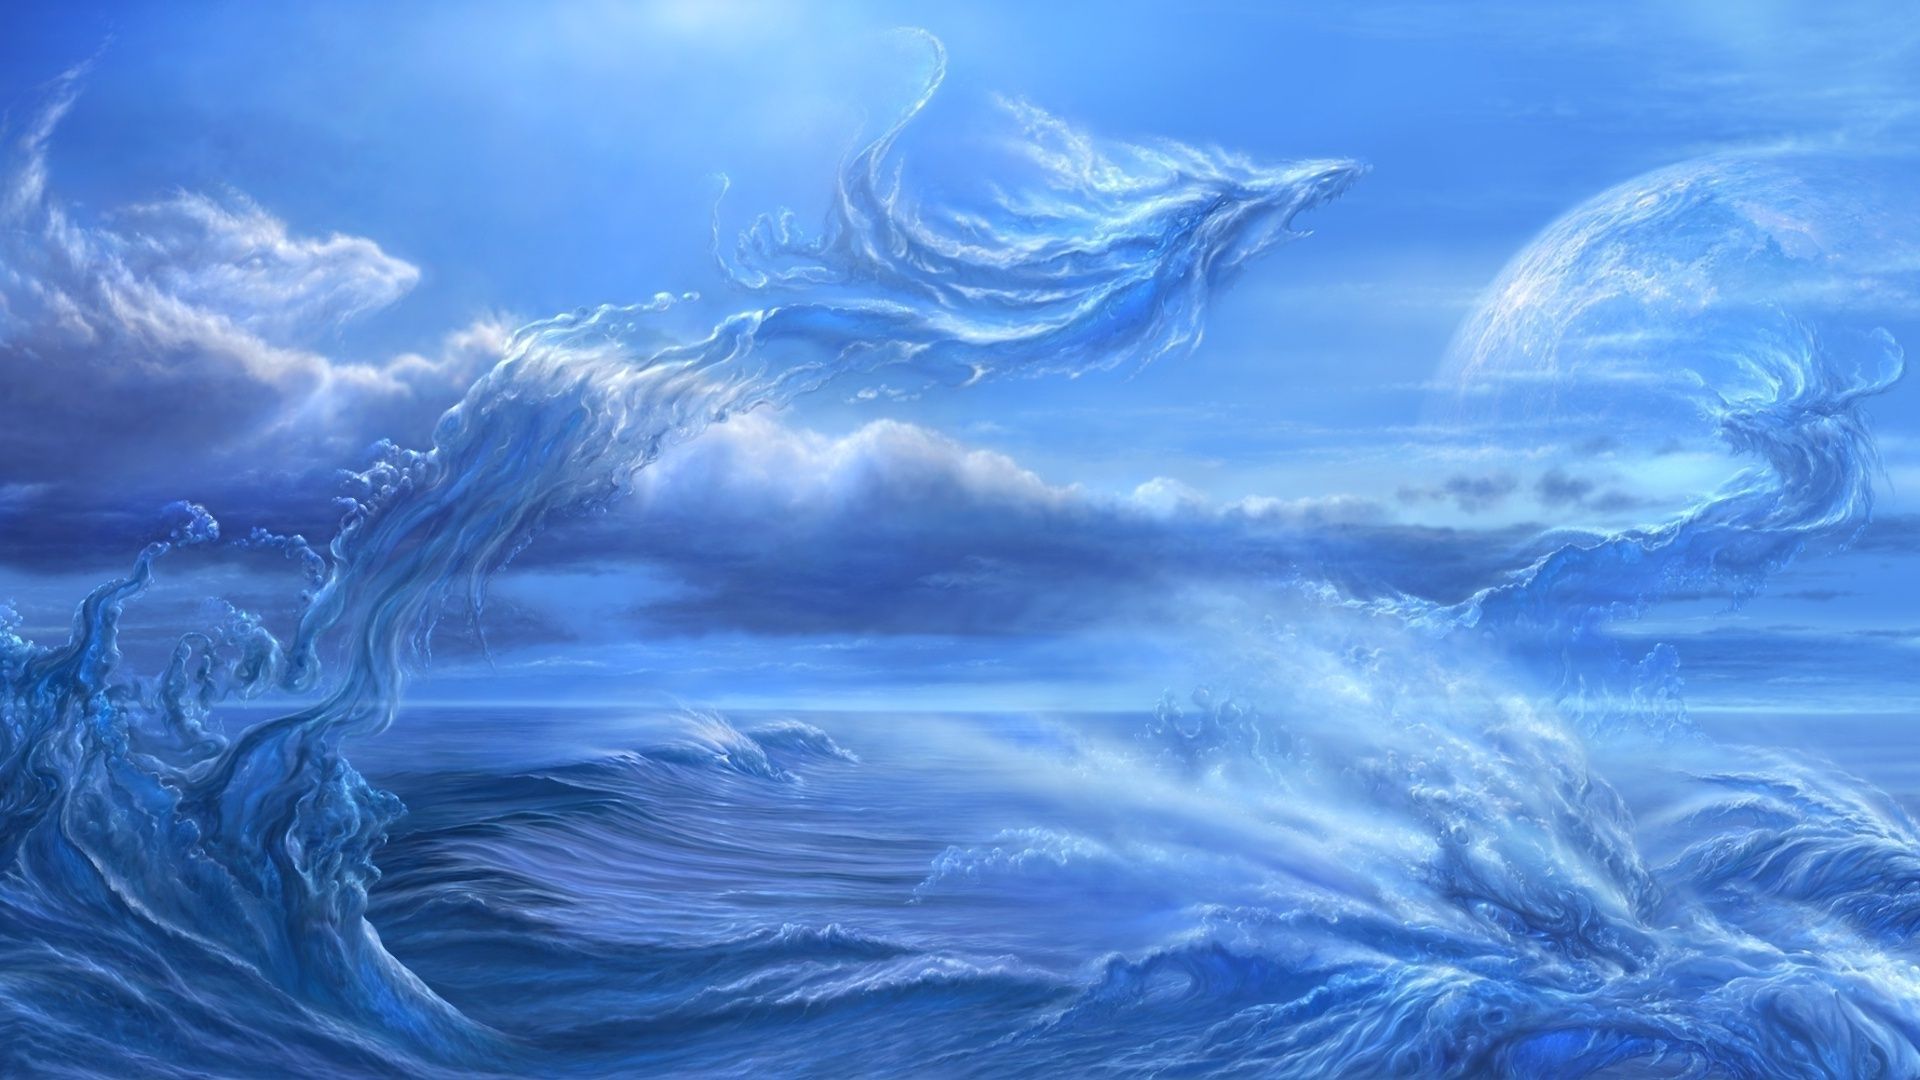 Water Fantasy wallpaper. Ocean picture, Water dragon, Water